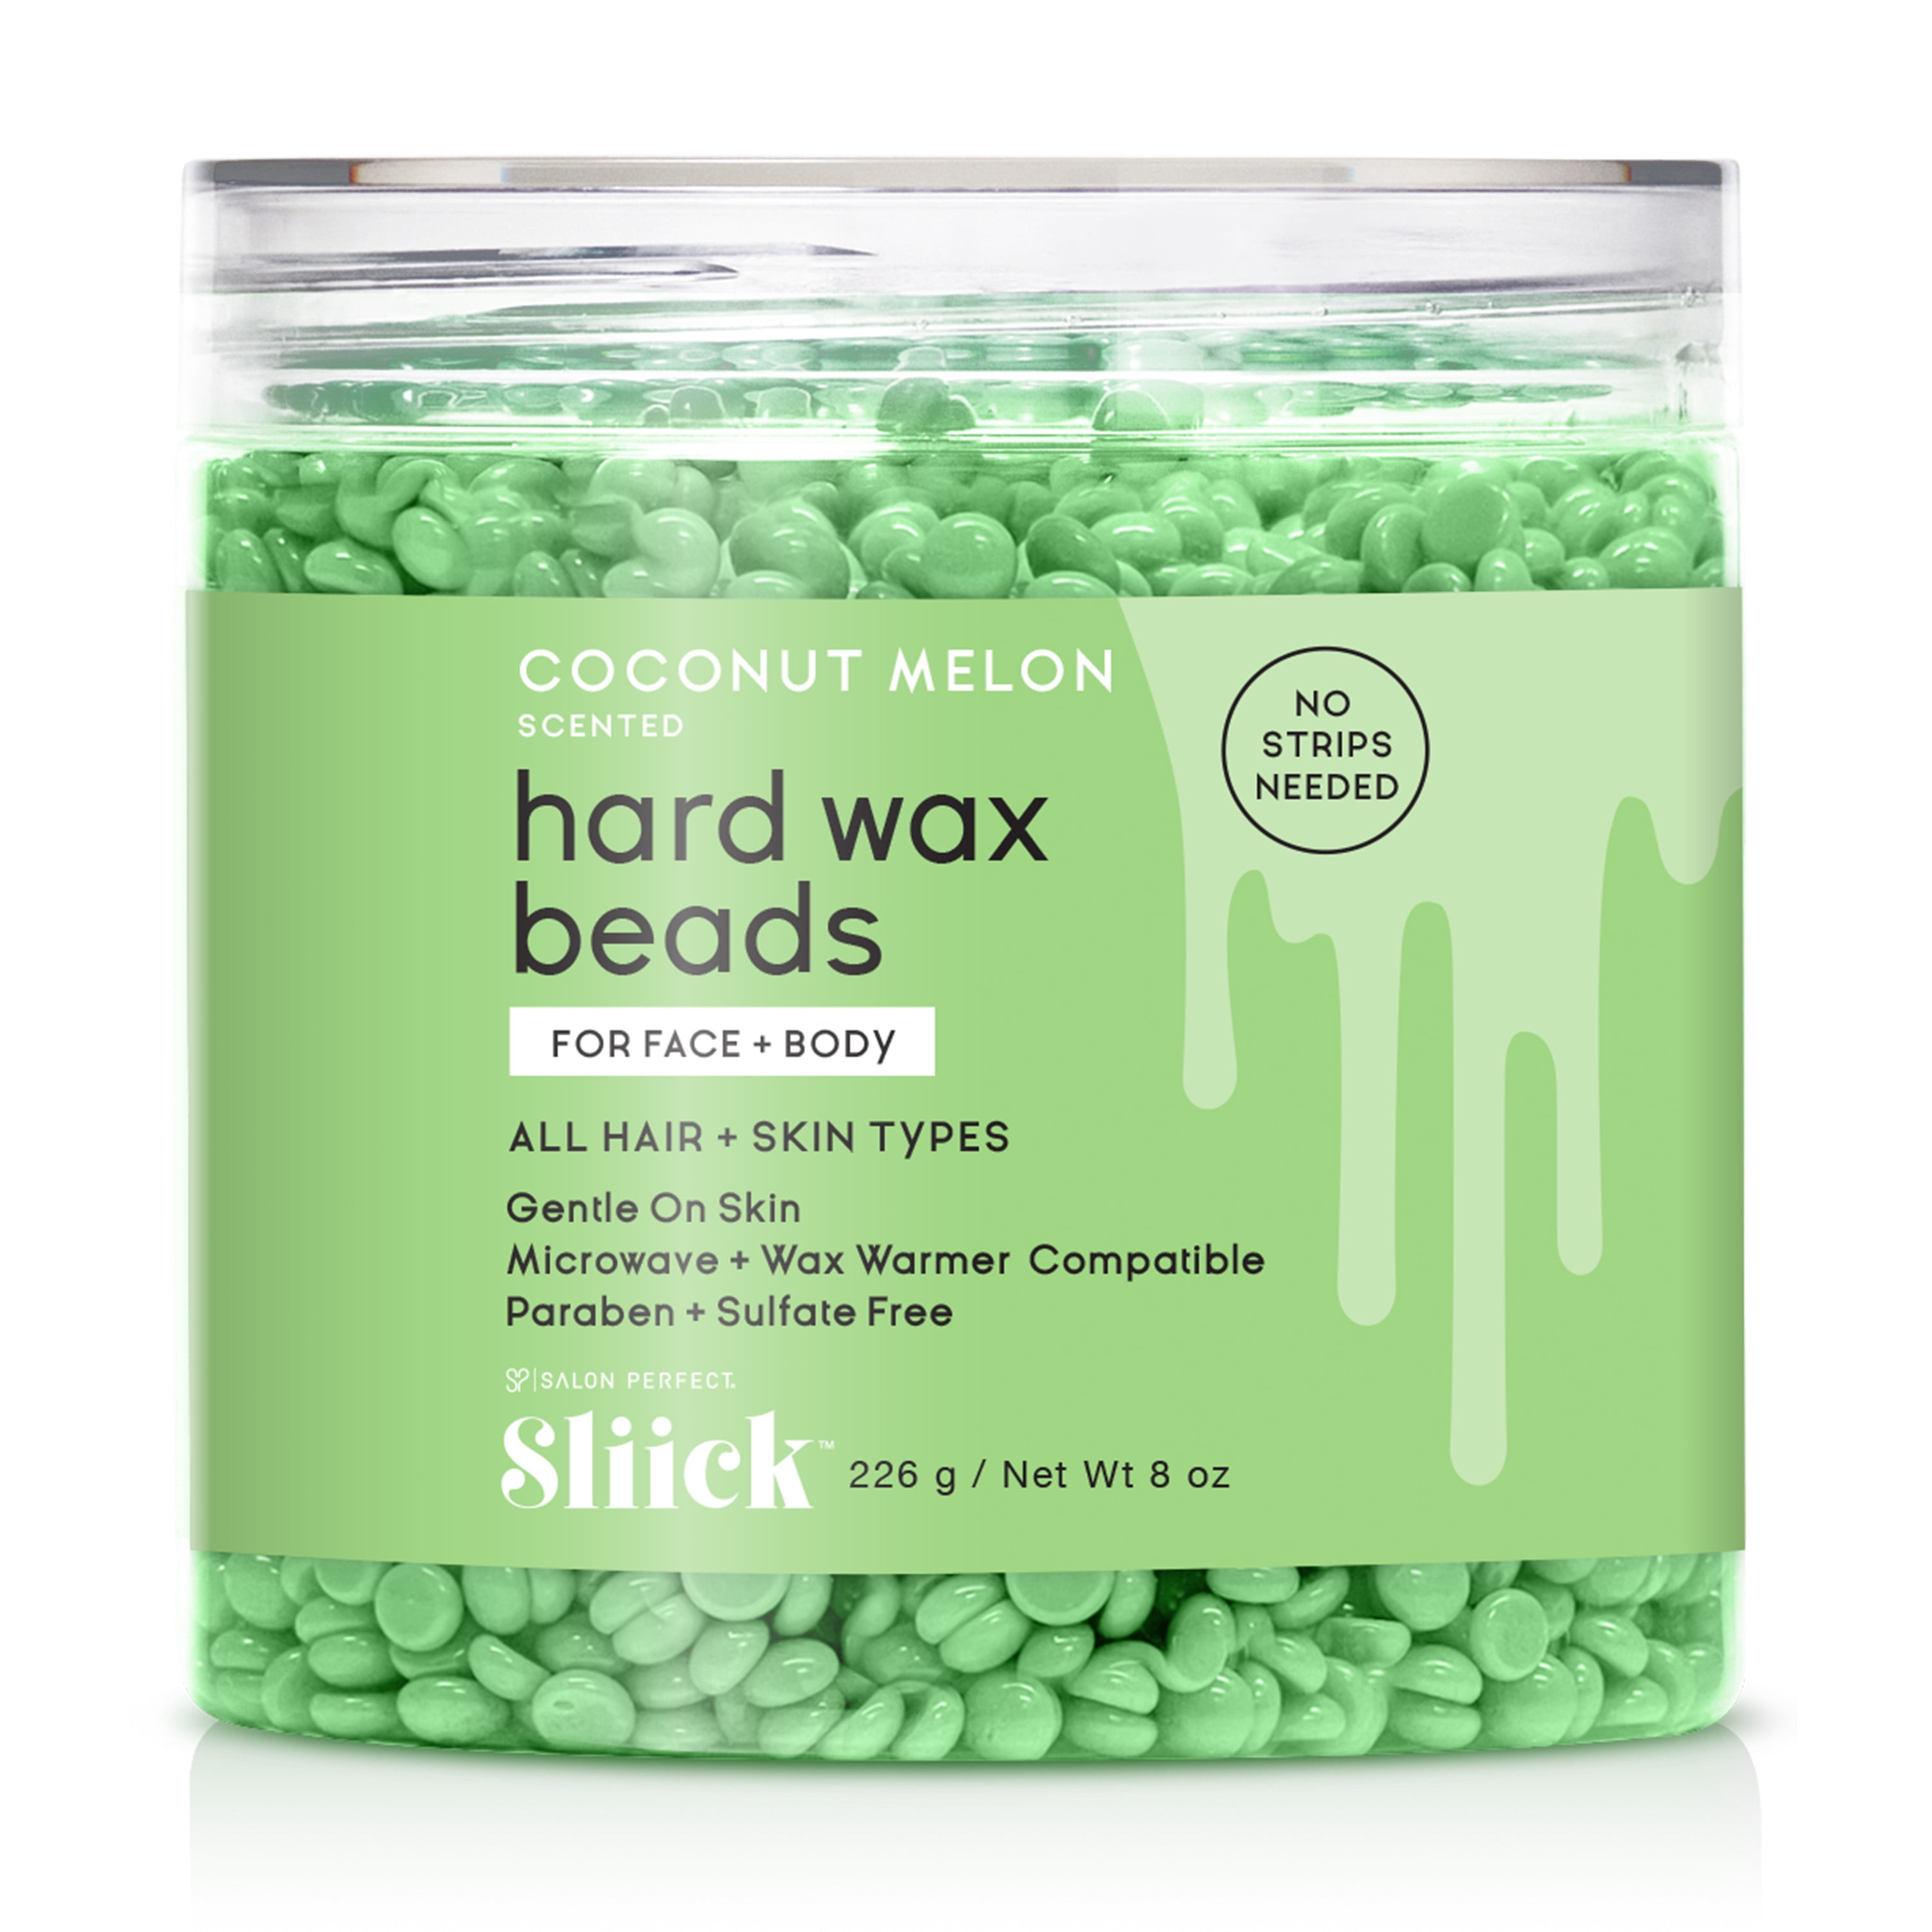 Stardget Wax Warmer Hair Removal Kit with Hard Wax Beans and Wax Applicator Sticks